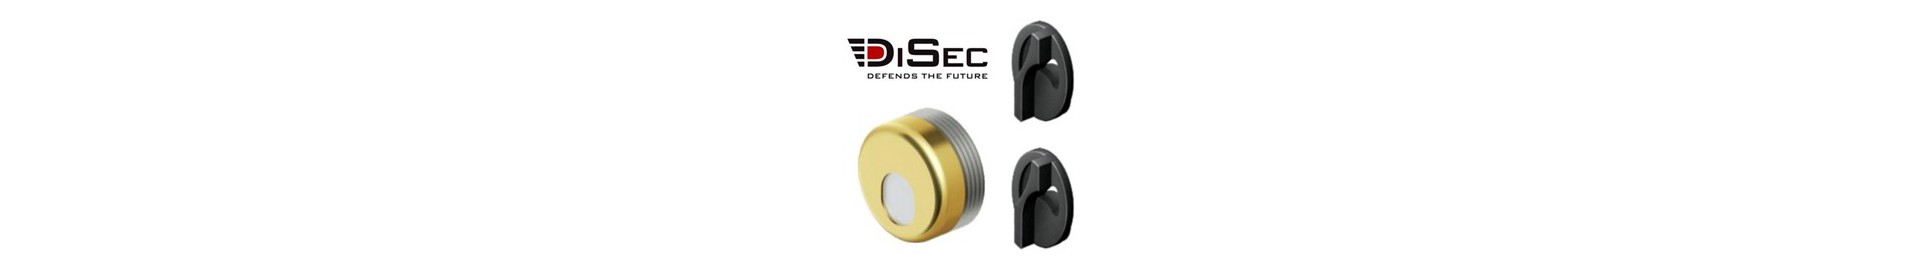 Copy of DISEC Magnetic Keys | Ferreteria Gonzalez